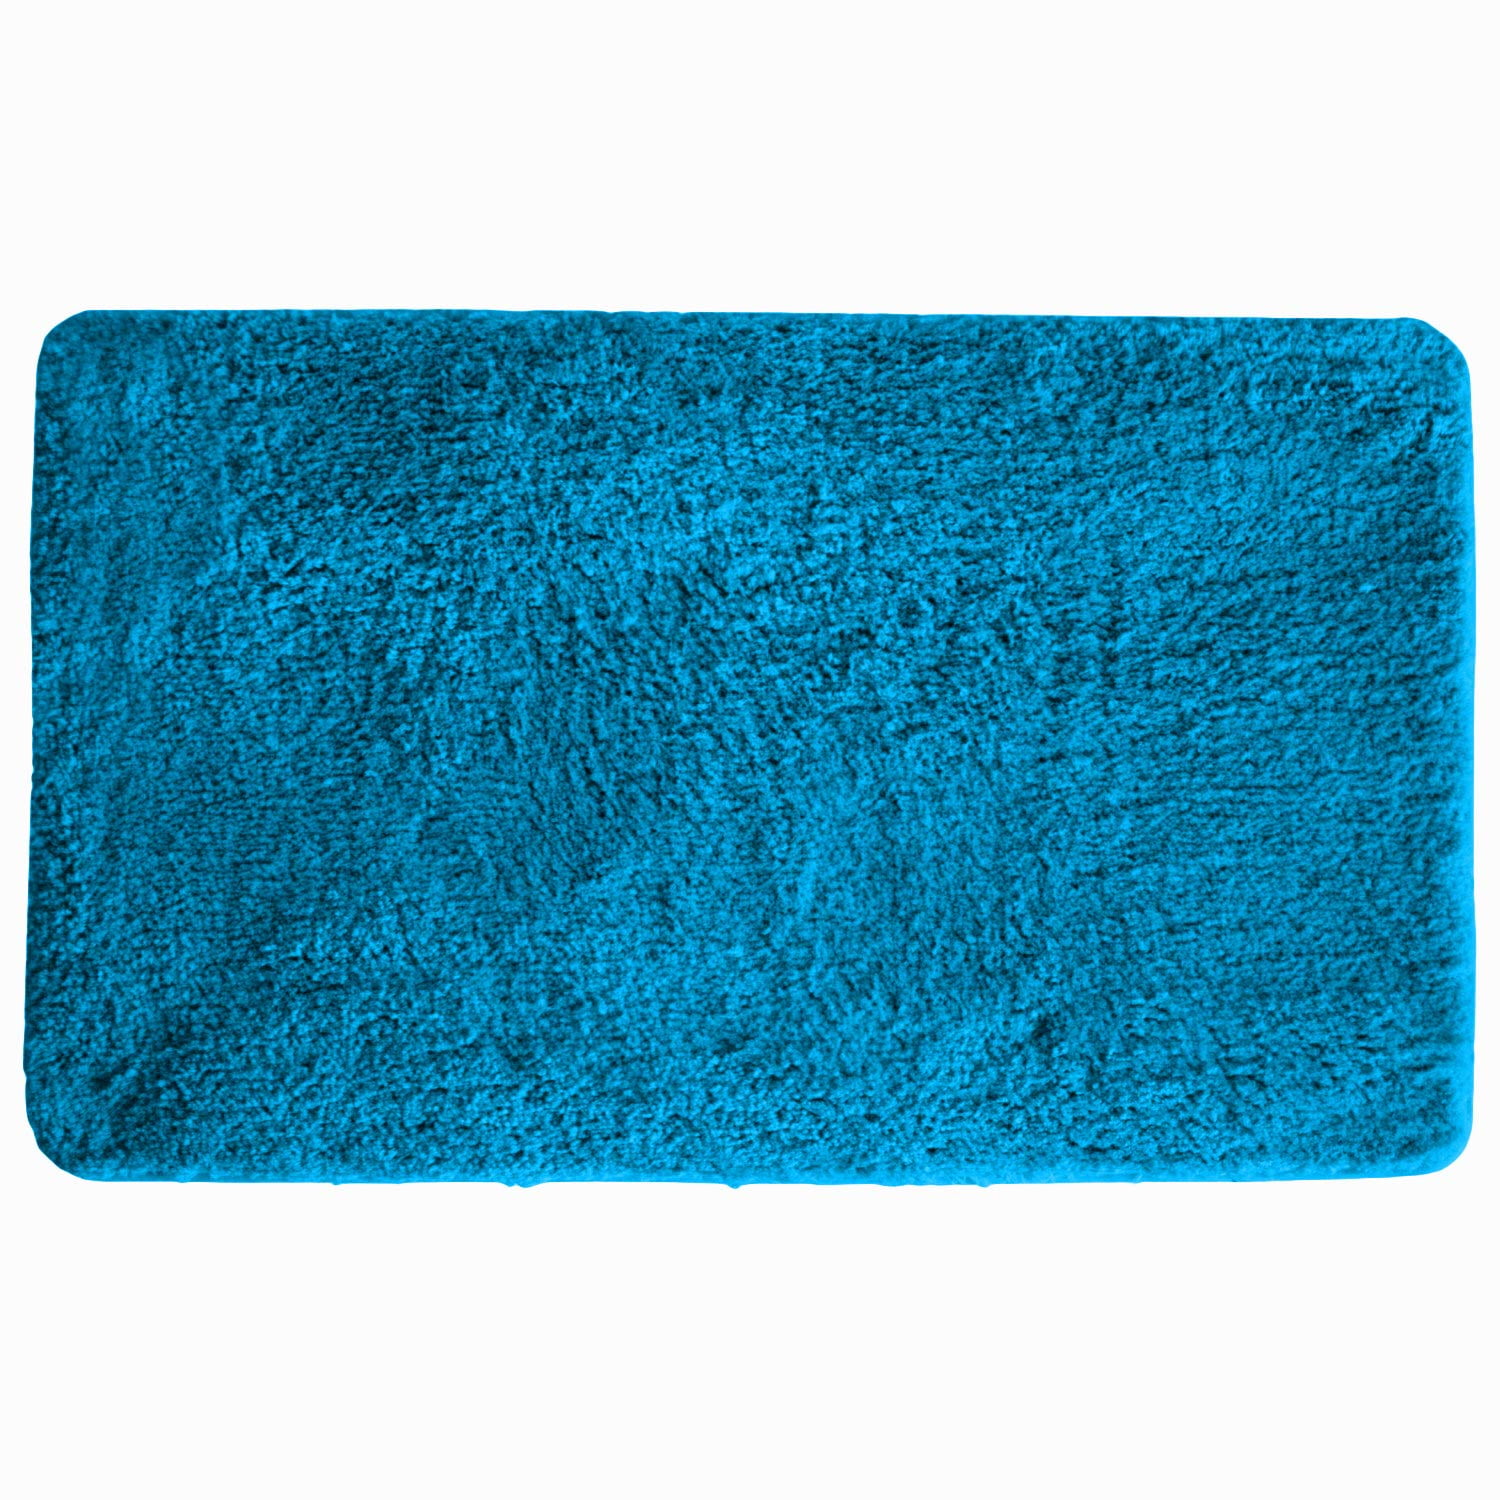 Thick Fluffy Microfiber Bathroom Rug Luxury Soft Plush Shaggy Bath Mat Mary 